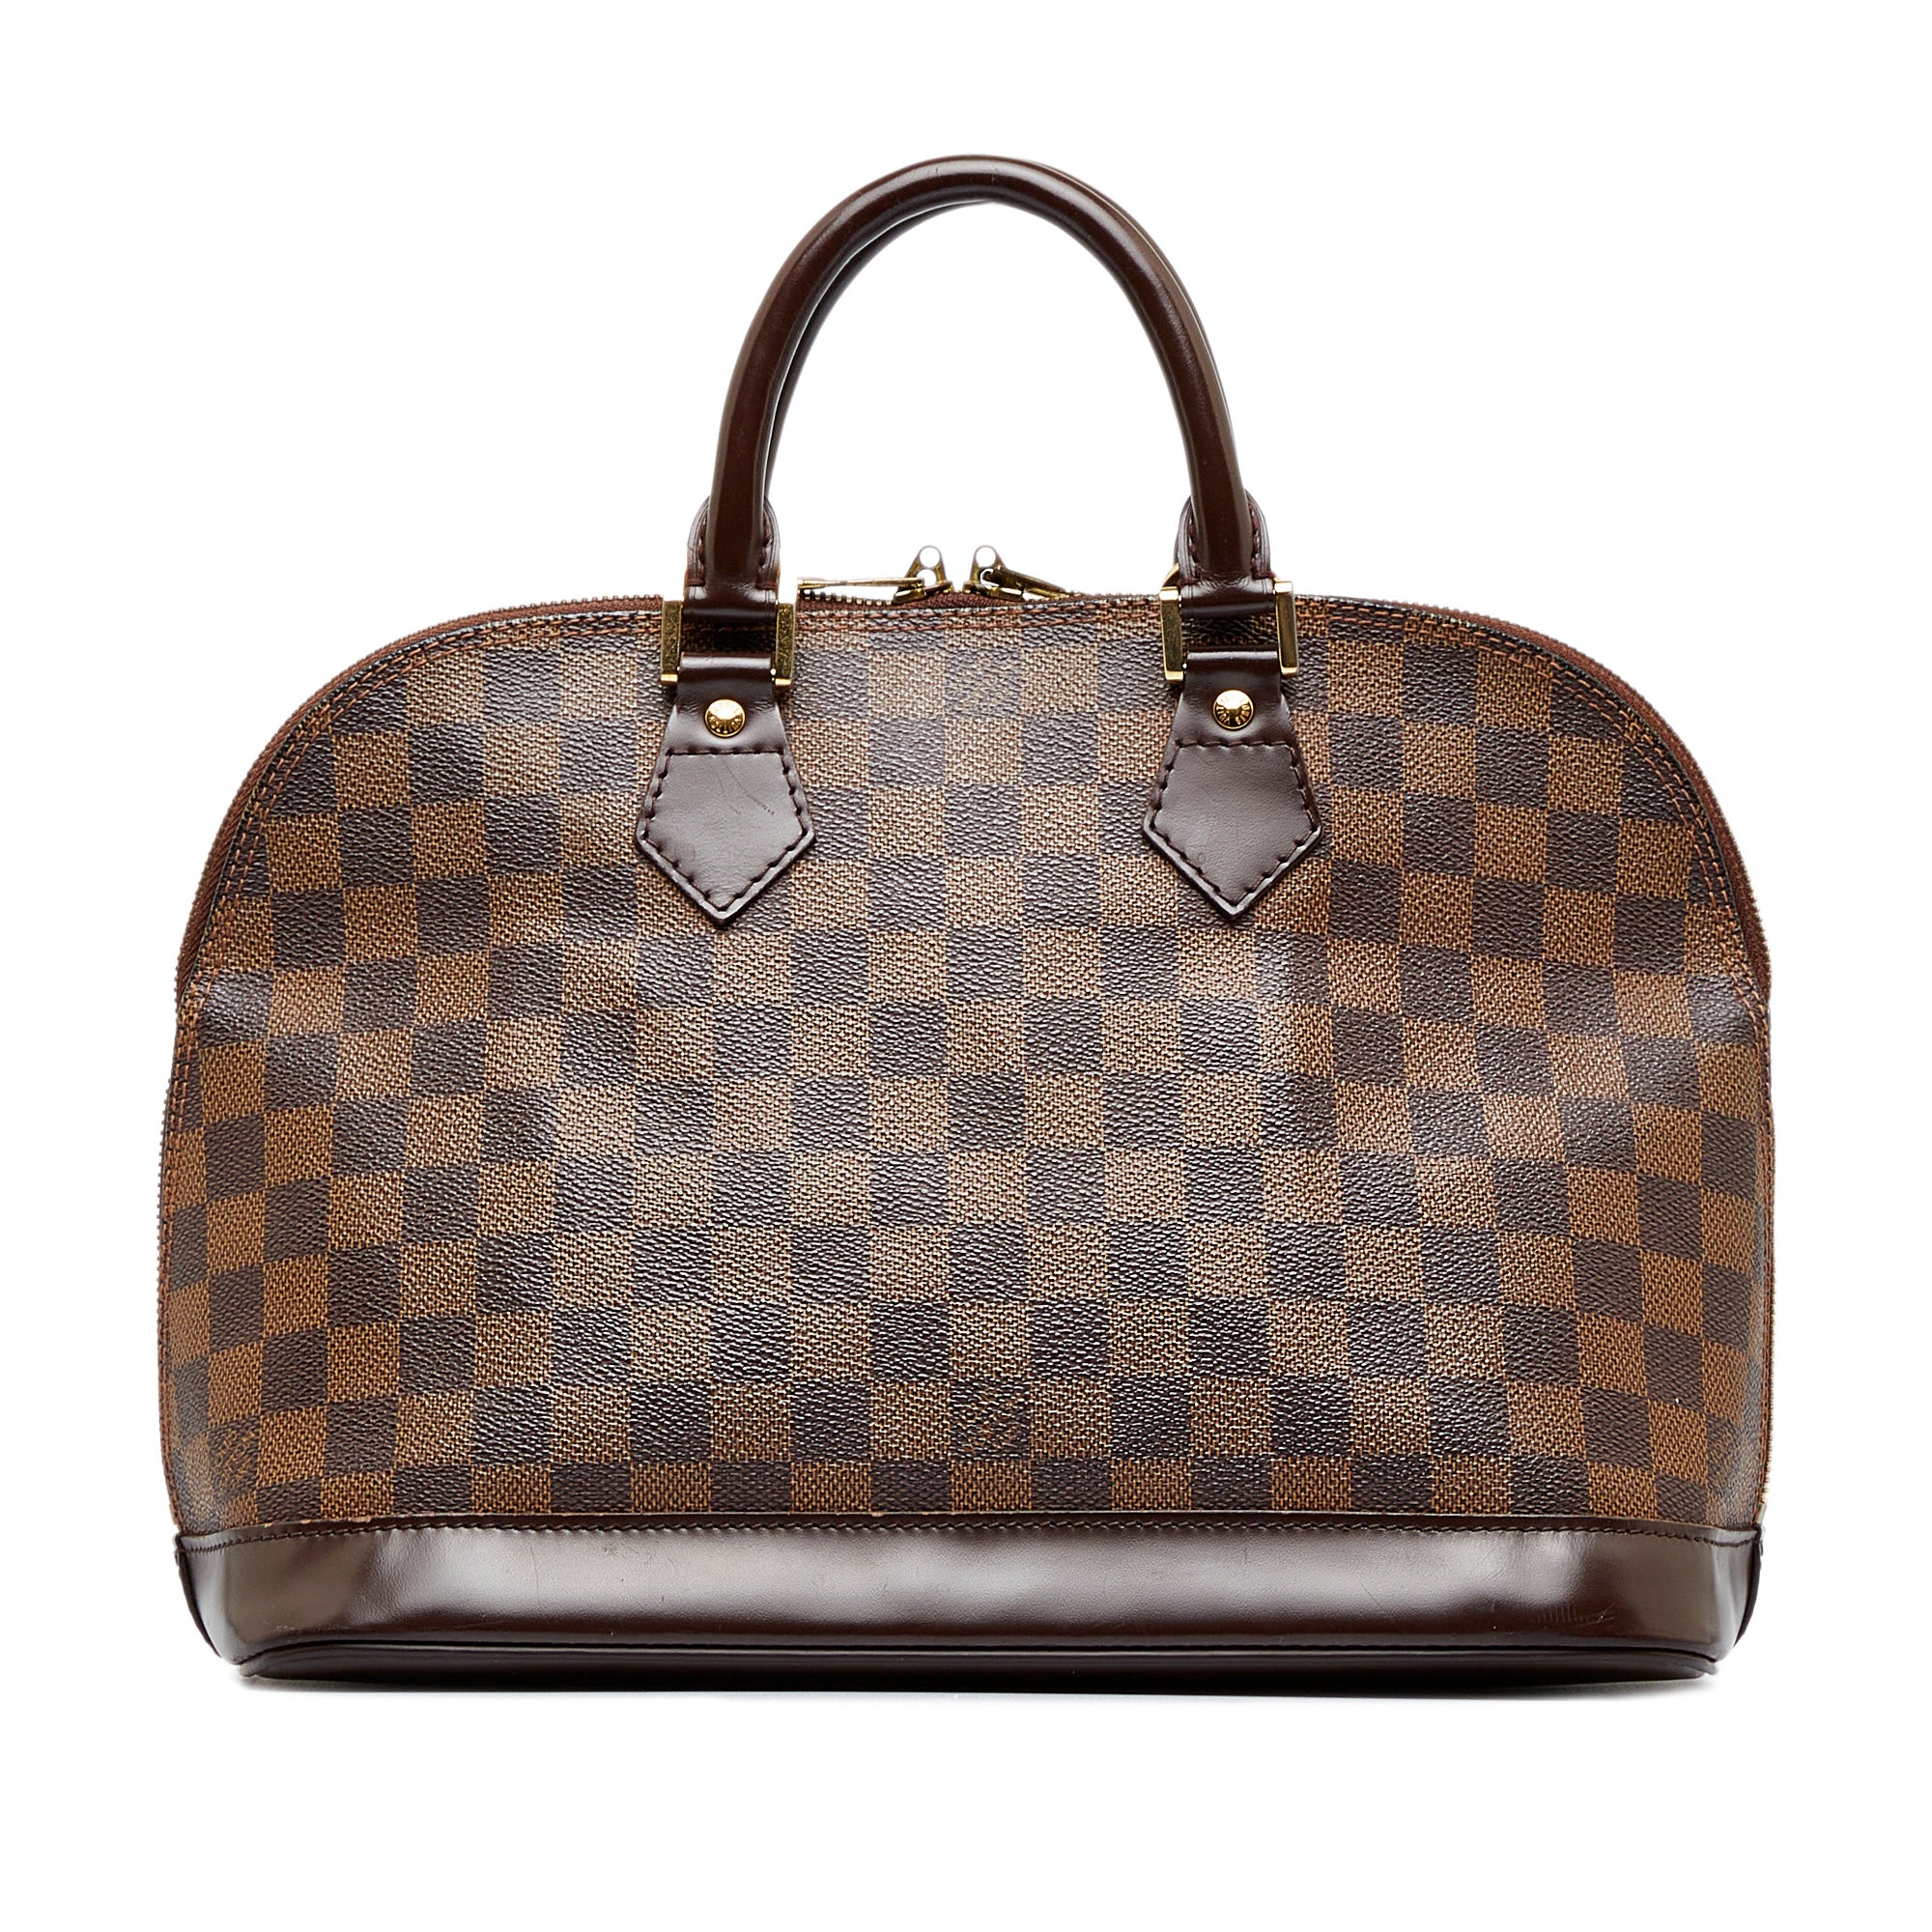 Louis Vuitton Alma BB Damier Ebene Shoulder Bag